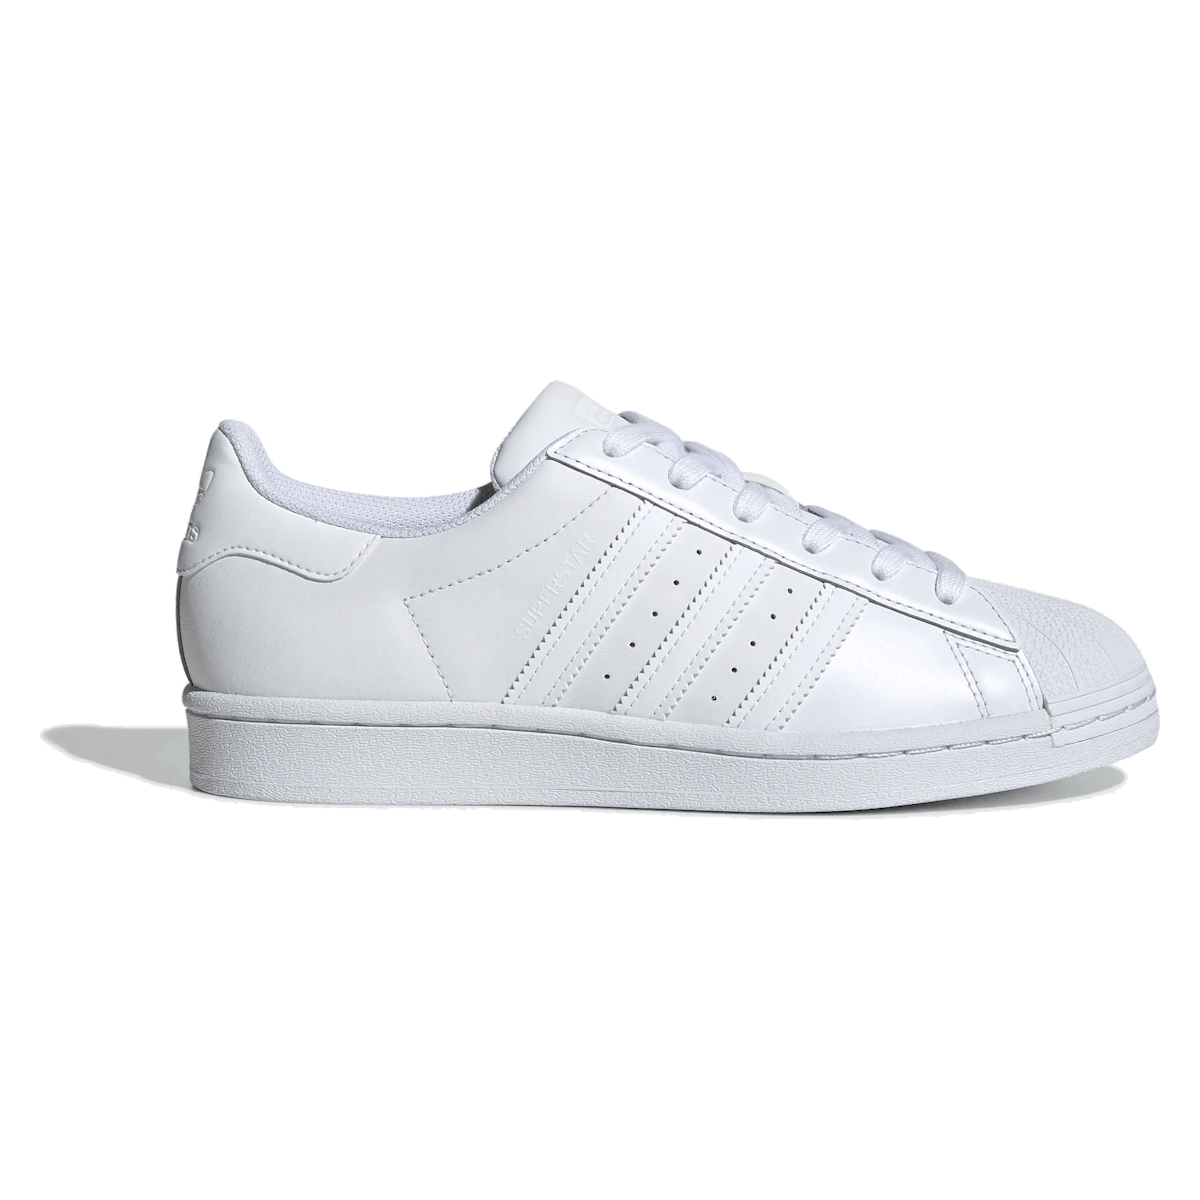 adidas Superstar All White (W)